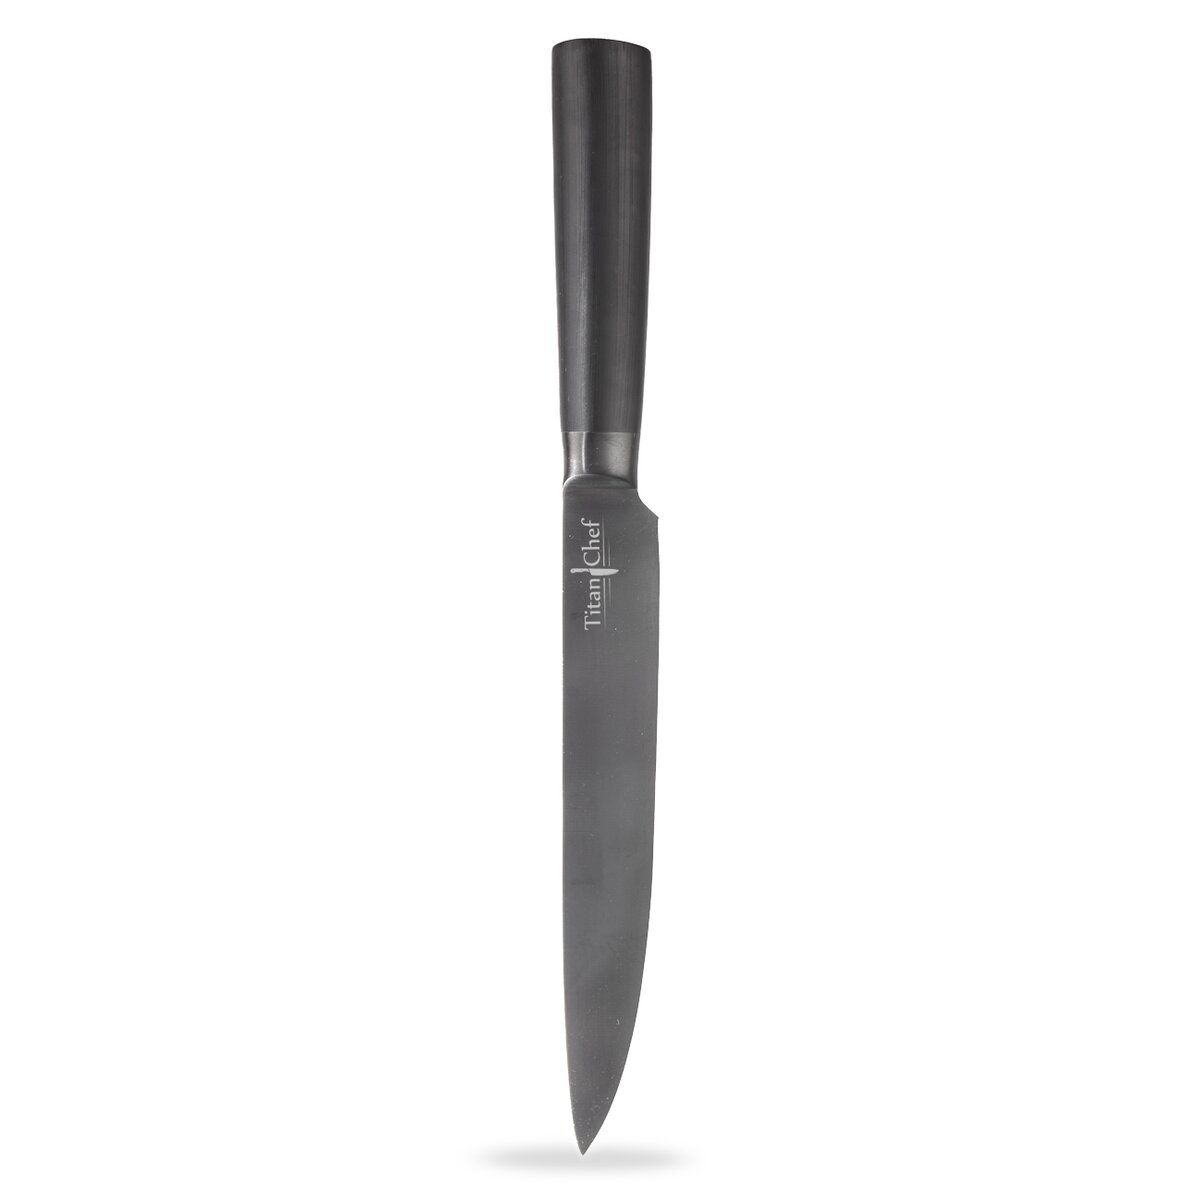 Kuchyňský nůž Titan s titanovým povrchem 20 cm (akční sada 3 ks)